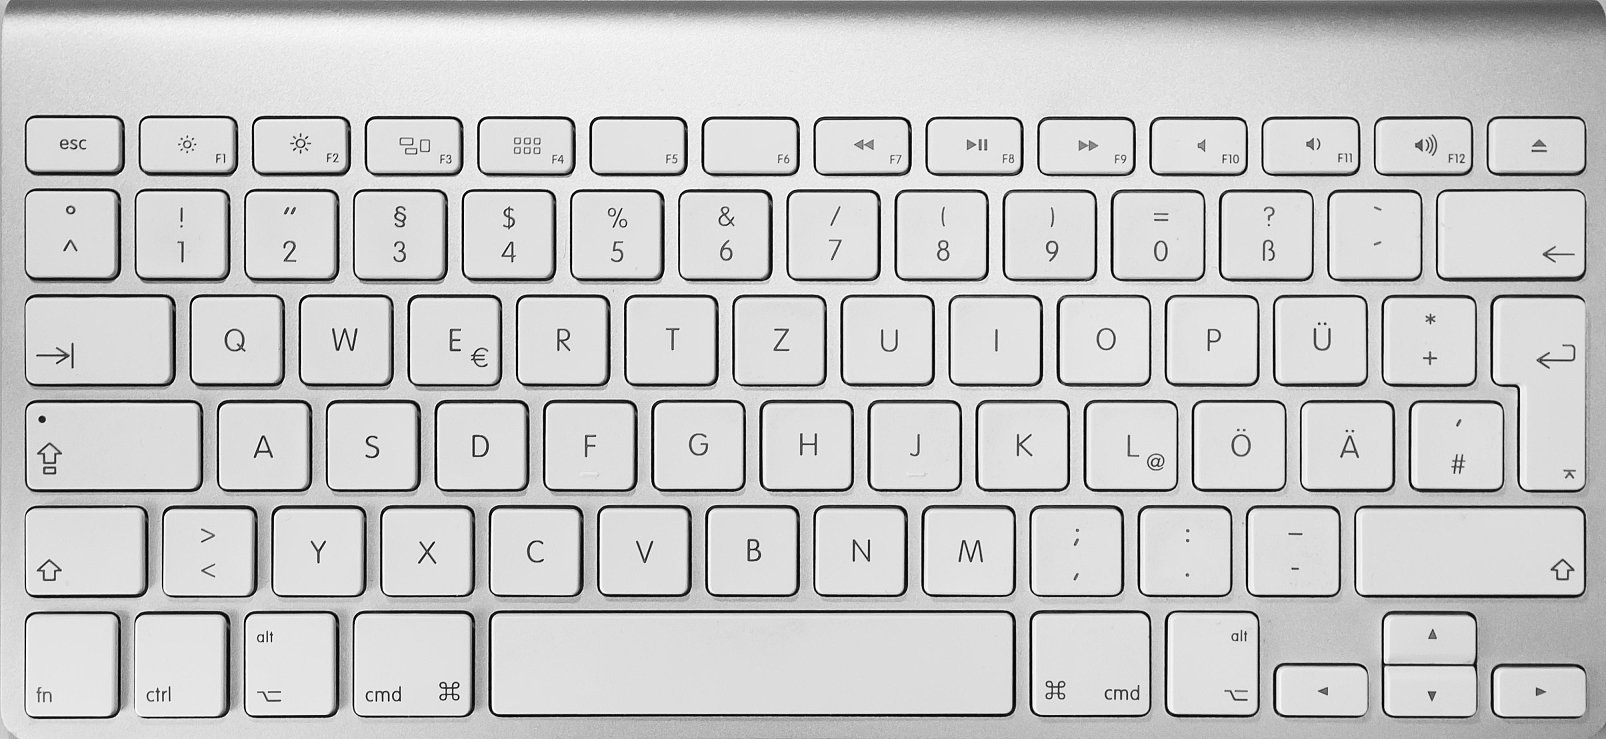 apple keyboard german layout m4k63